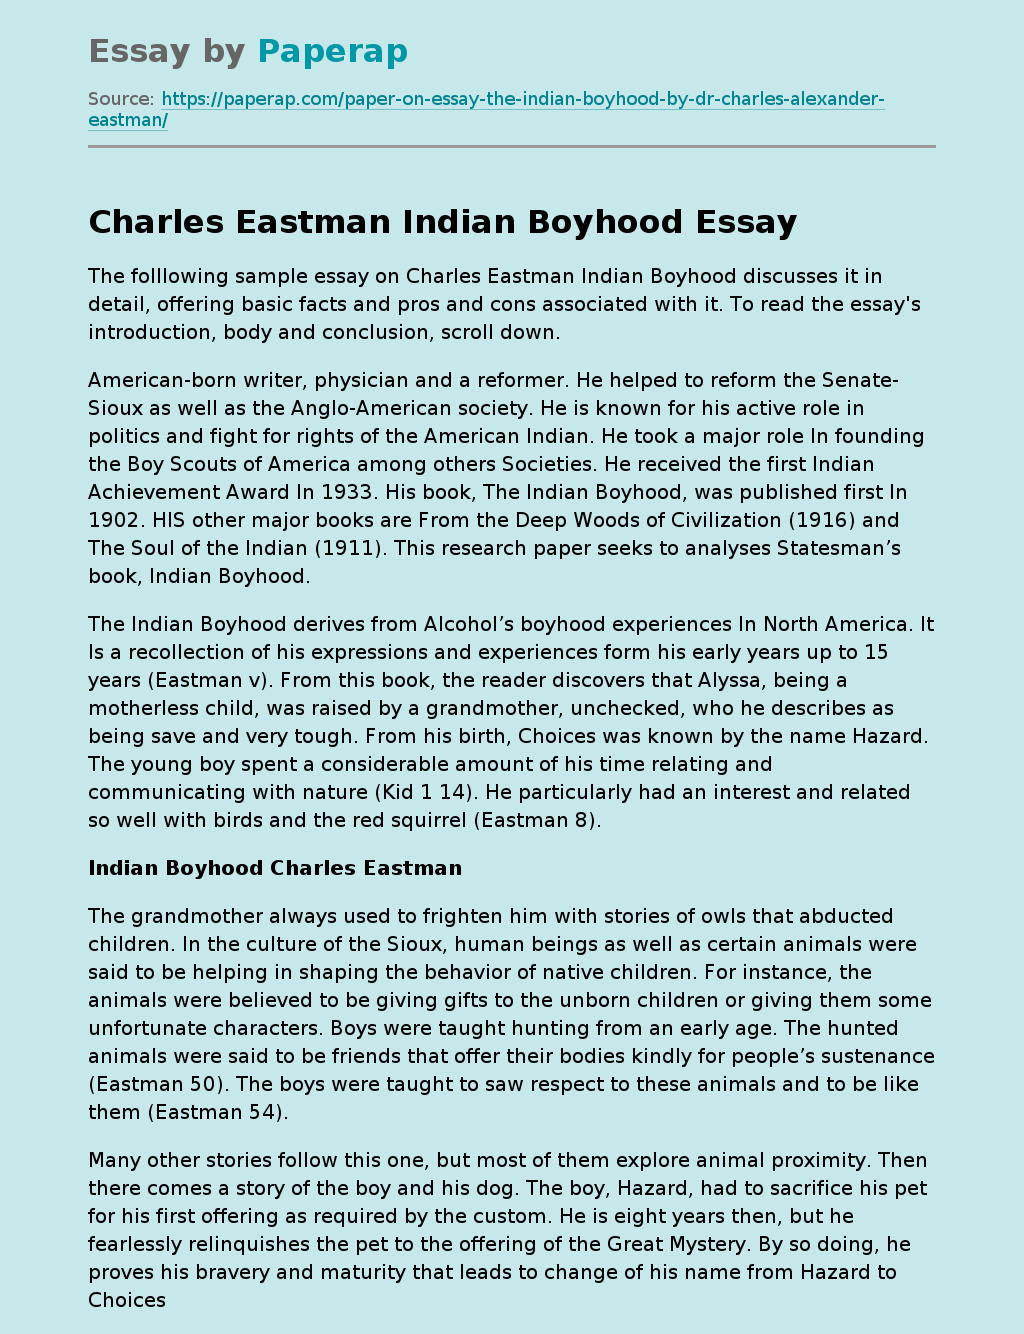 Charles Eastman Indian Boyhood